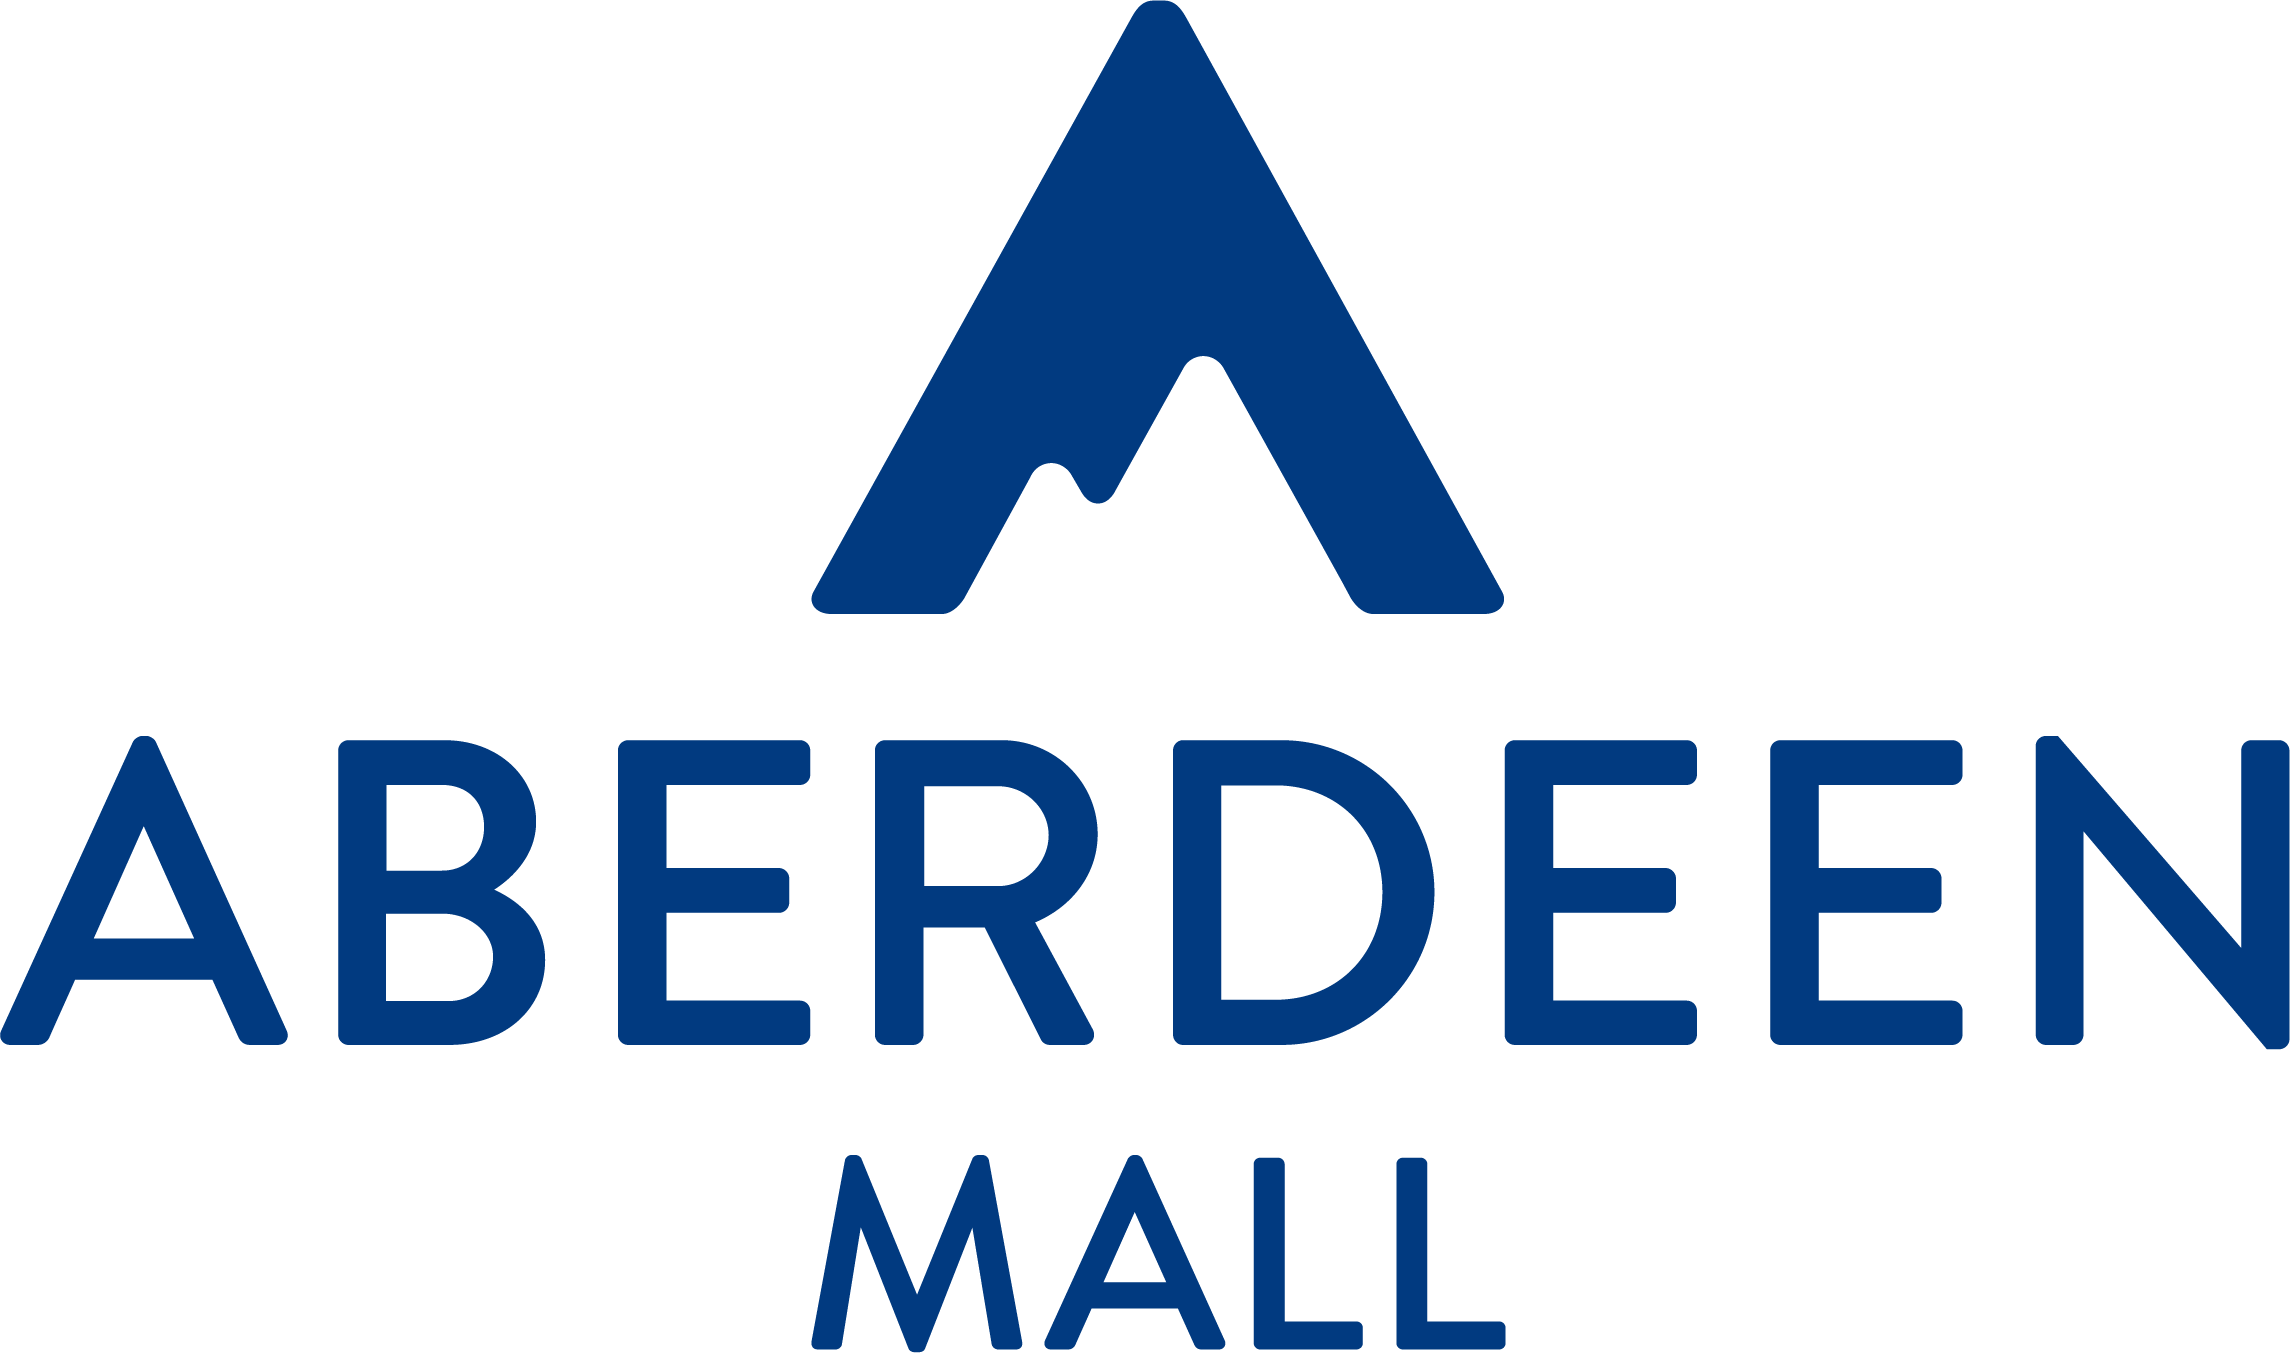 Return to Aberdeen Mall Homepage